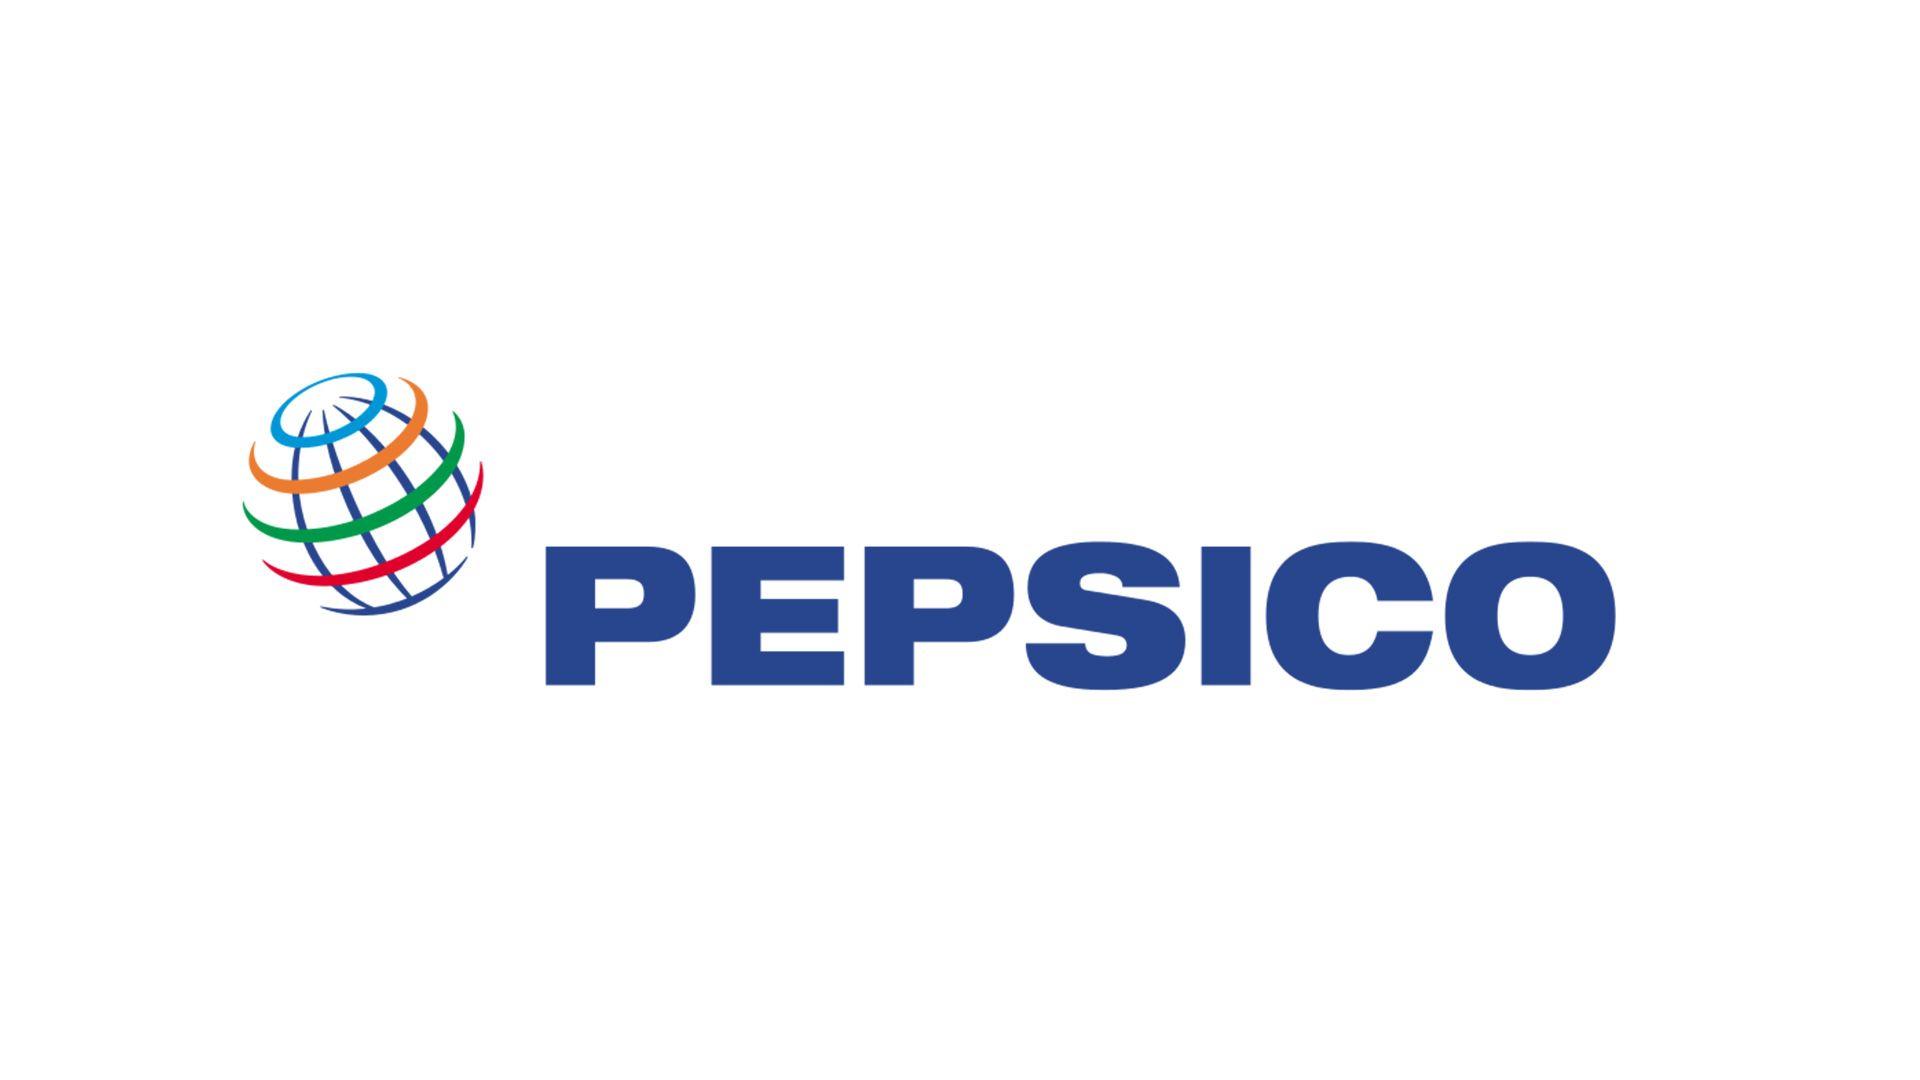 Pepsico Logo White Background wallpaper 2018 in Brands & Logos